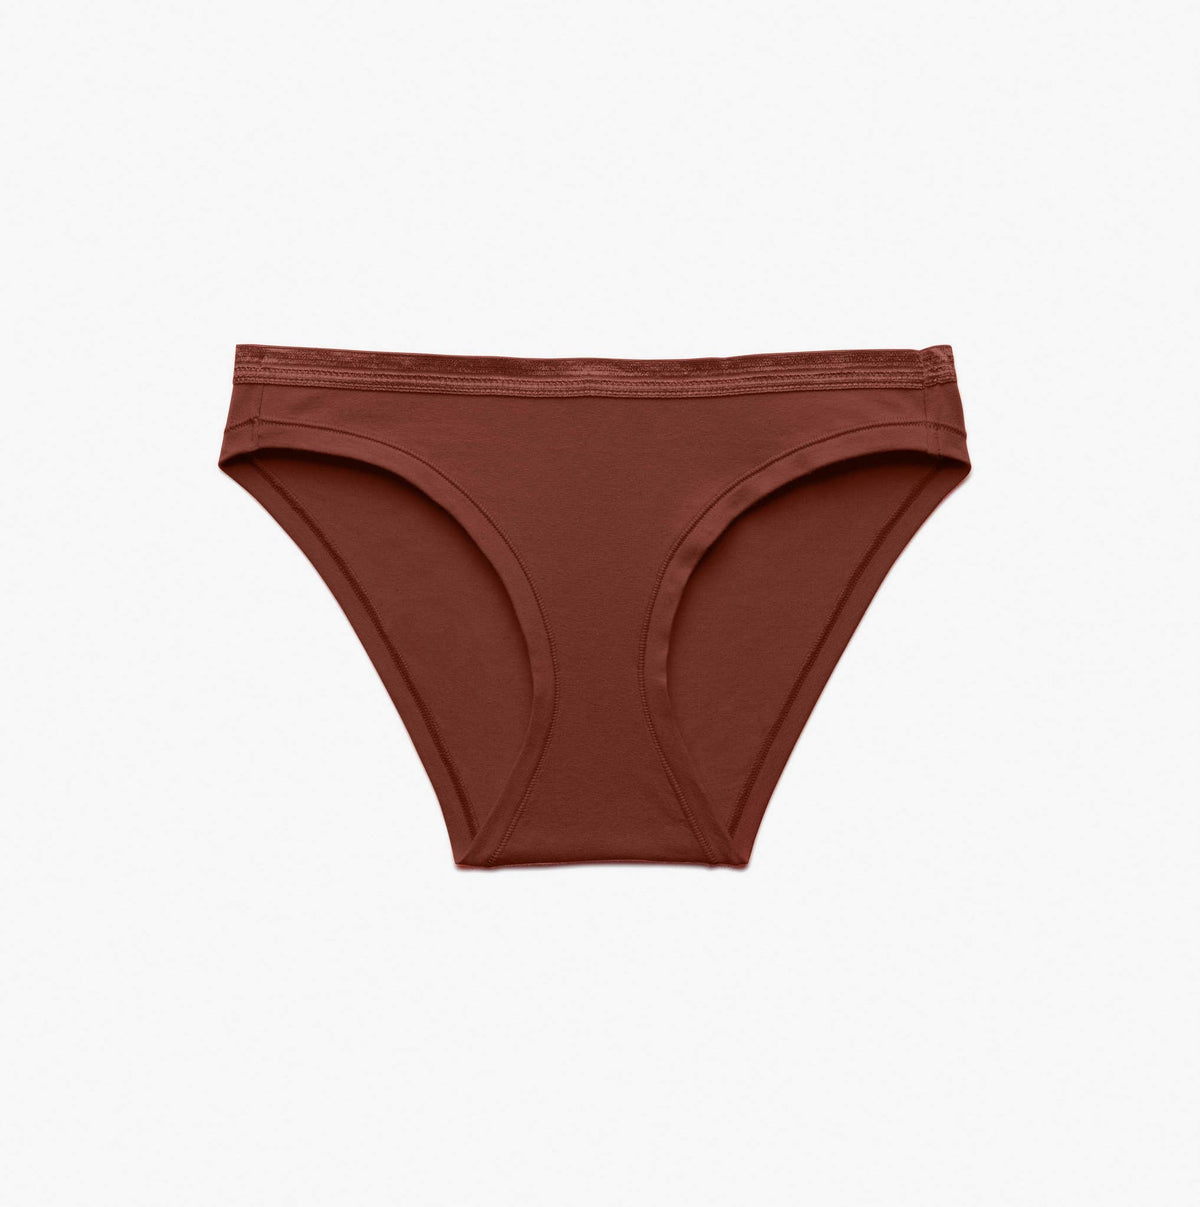 Subset Underwear (Knickey) - My Nude Shade